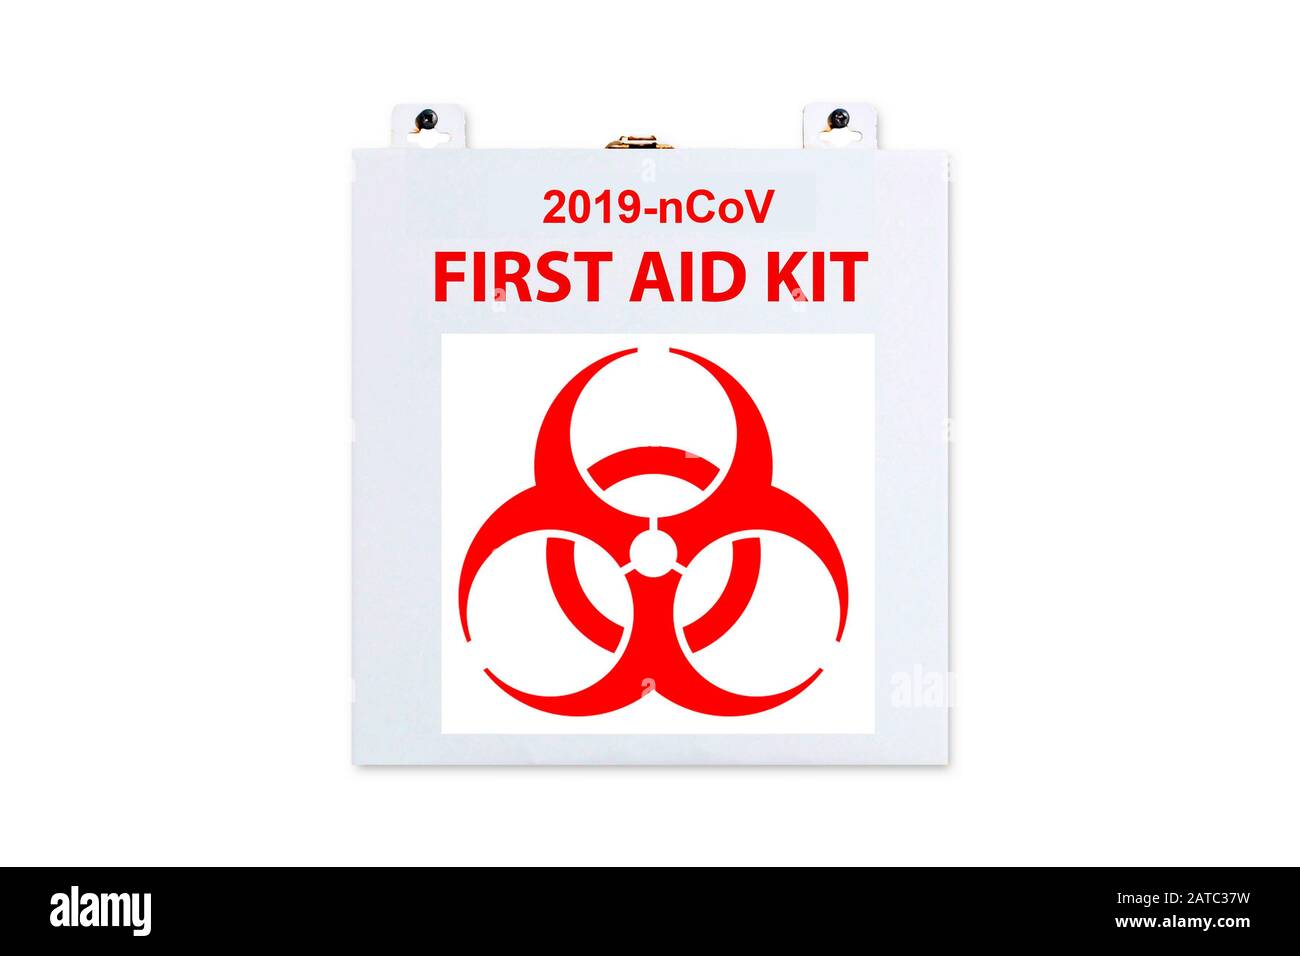 First Aid Kit, Erste Hilfe Kasten, Corona-Virus, 2019-nCoV, Stock Photo